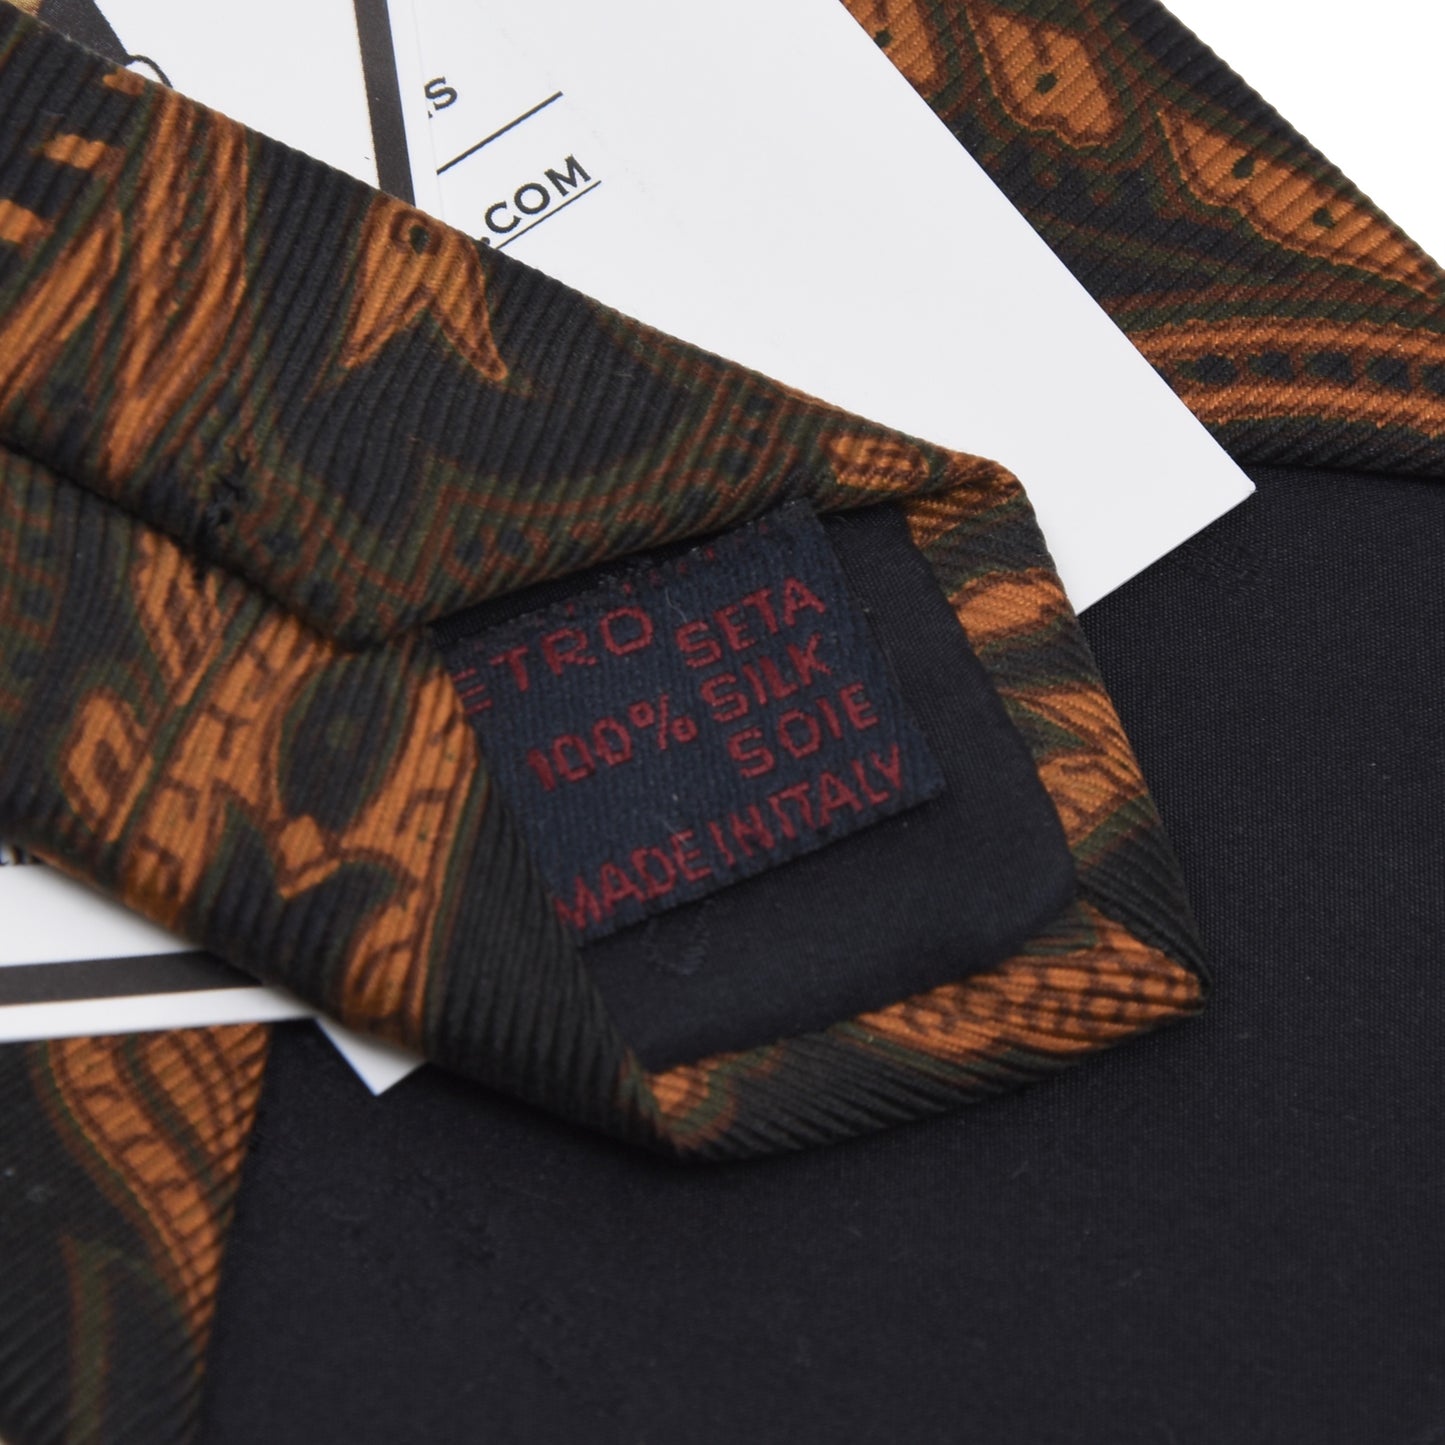 Etro Milano Silk Tie - Orange Paisley